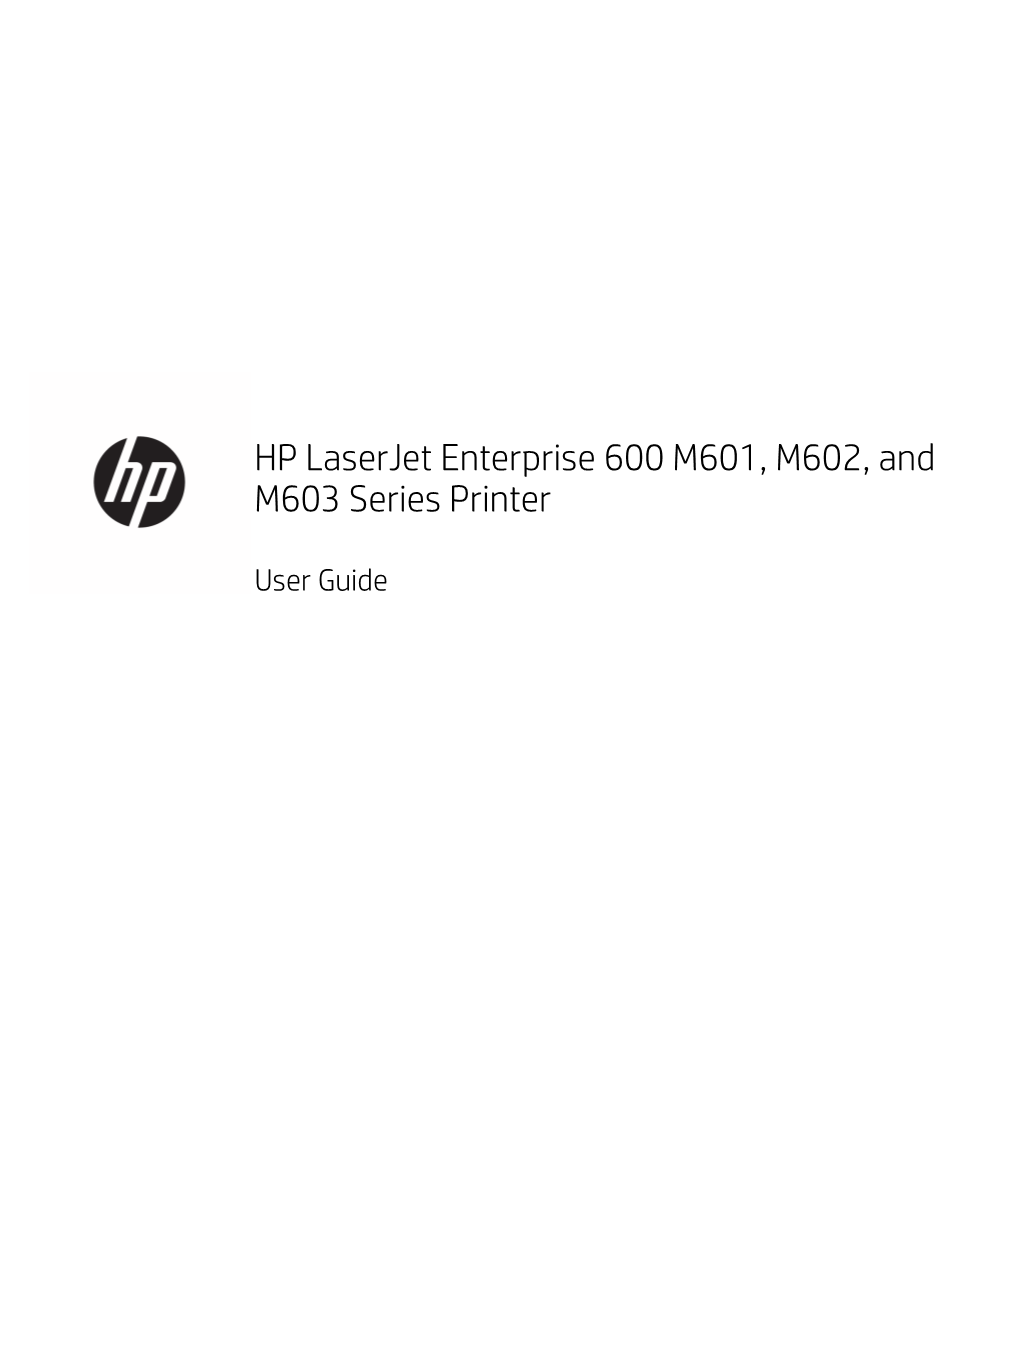 HP Laserjet Enterprise 600 M601, M602, and M603 Series Printer